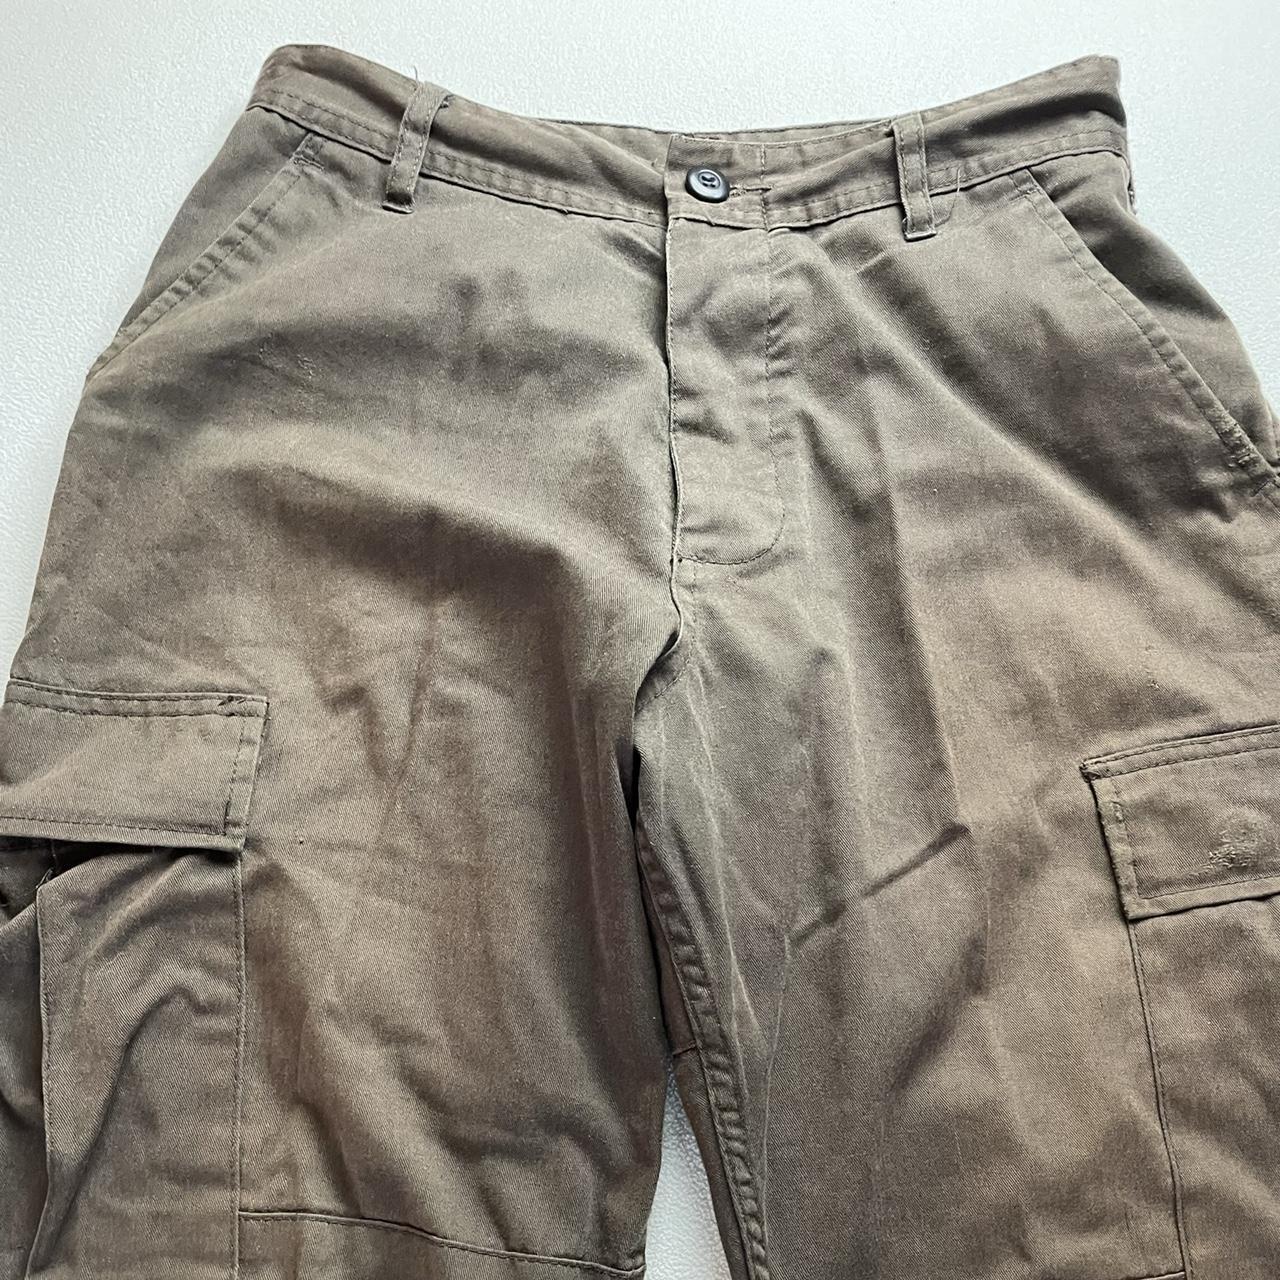 Rothko Brown Cargo Pants 28 X 30 Skated and worn - Depop